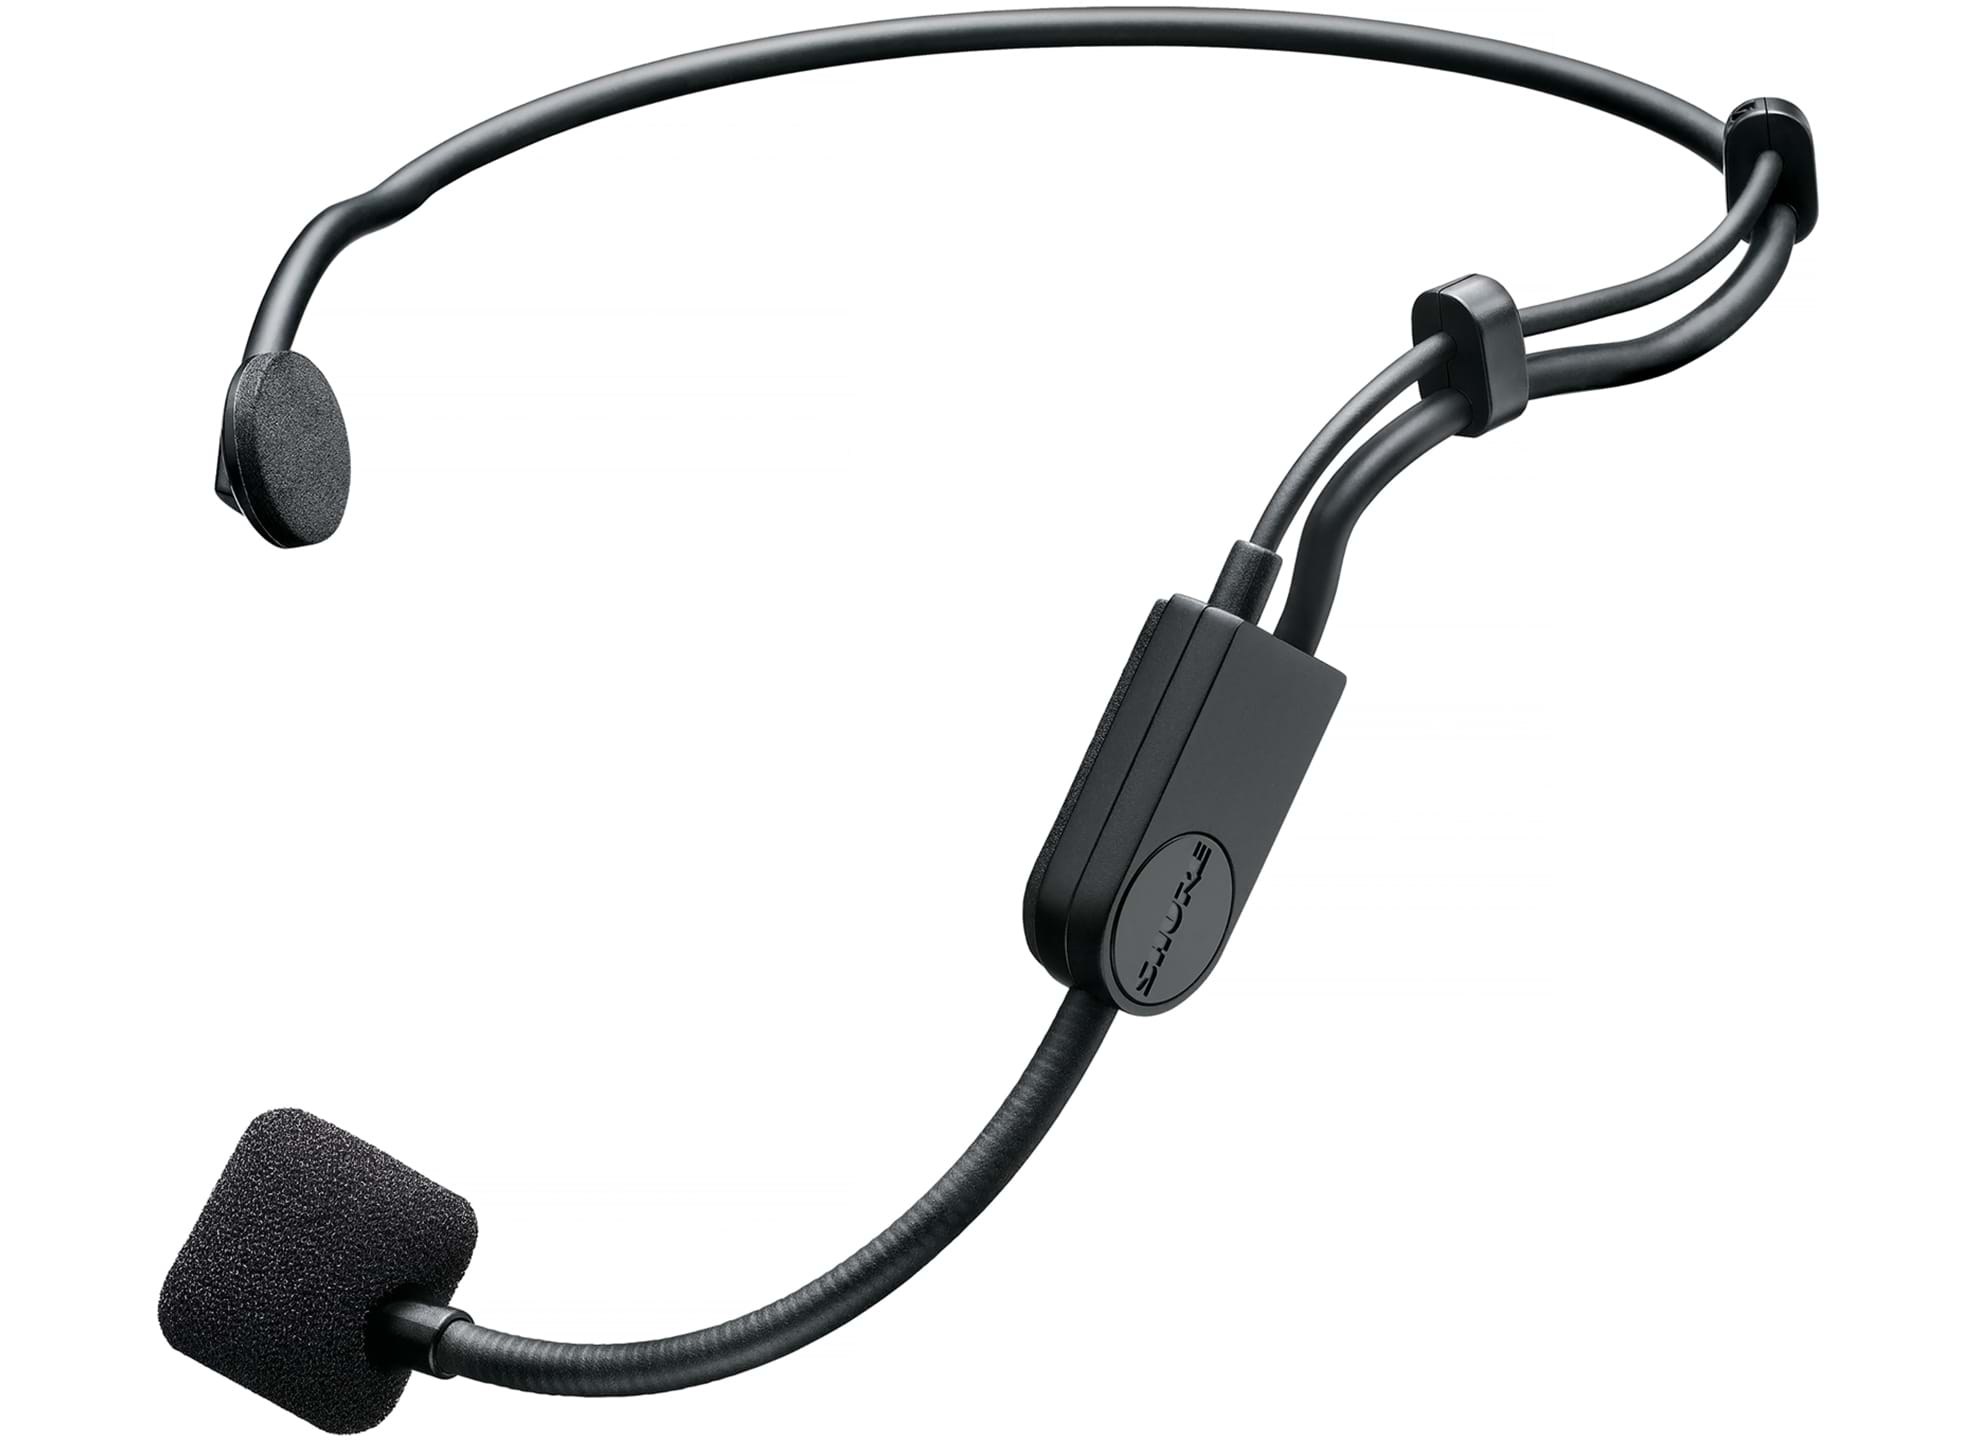 BLX14R Headset System PGA31 S8